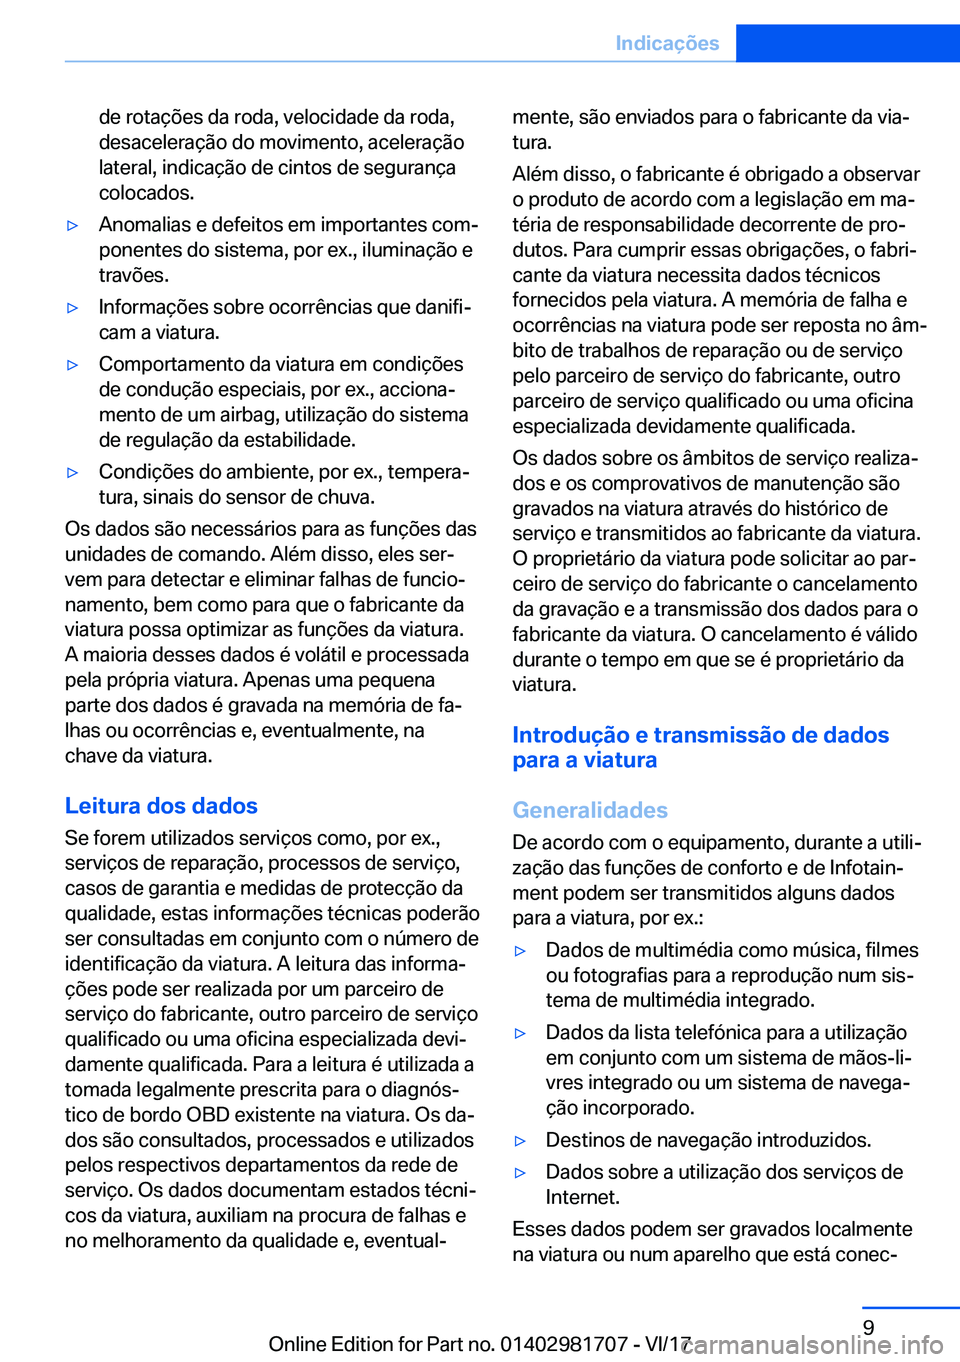 BMW M4 2018  Manual do condutor (in Portuguese) �d�e� �r�o�t�a�